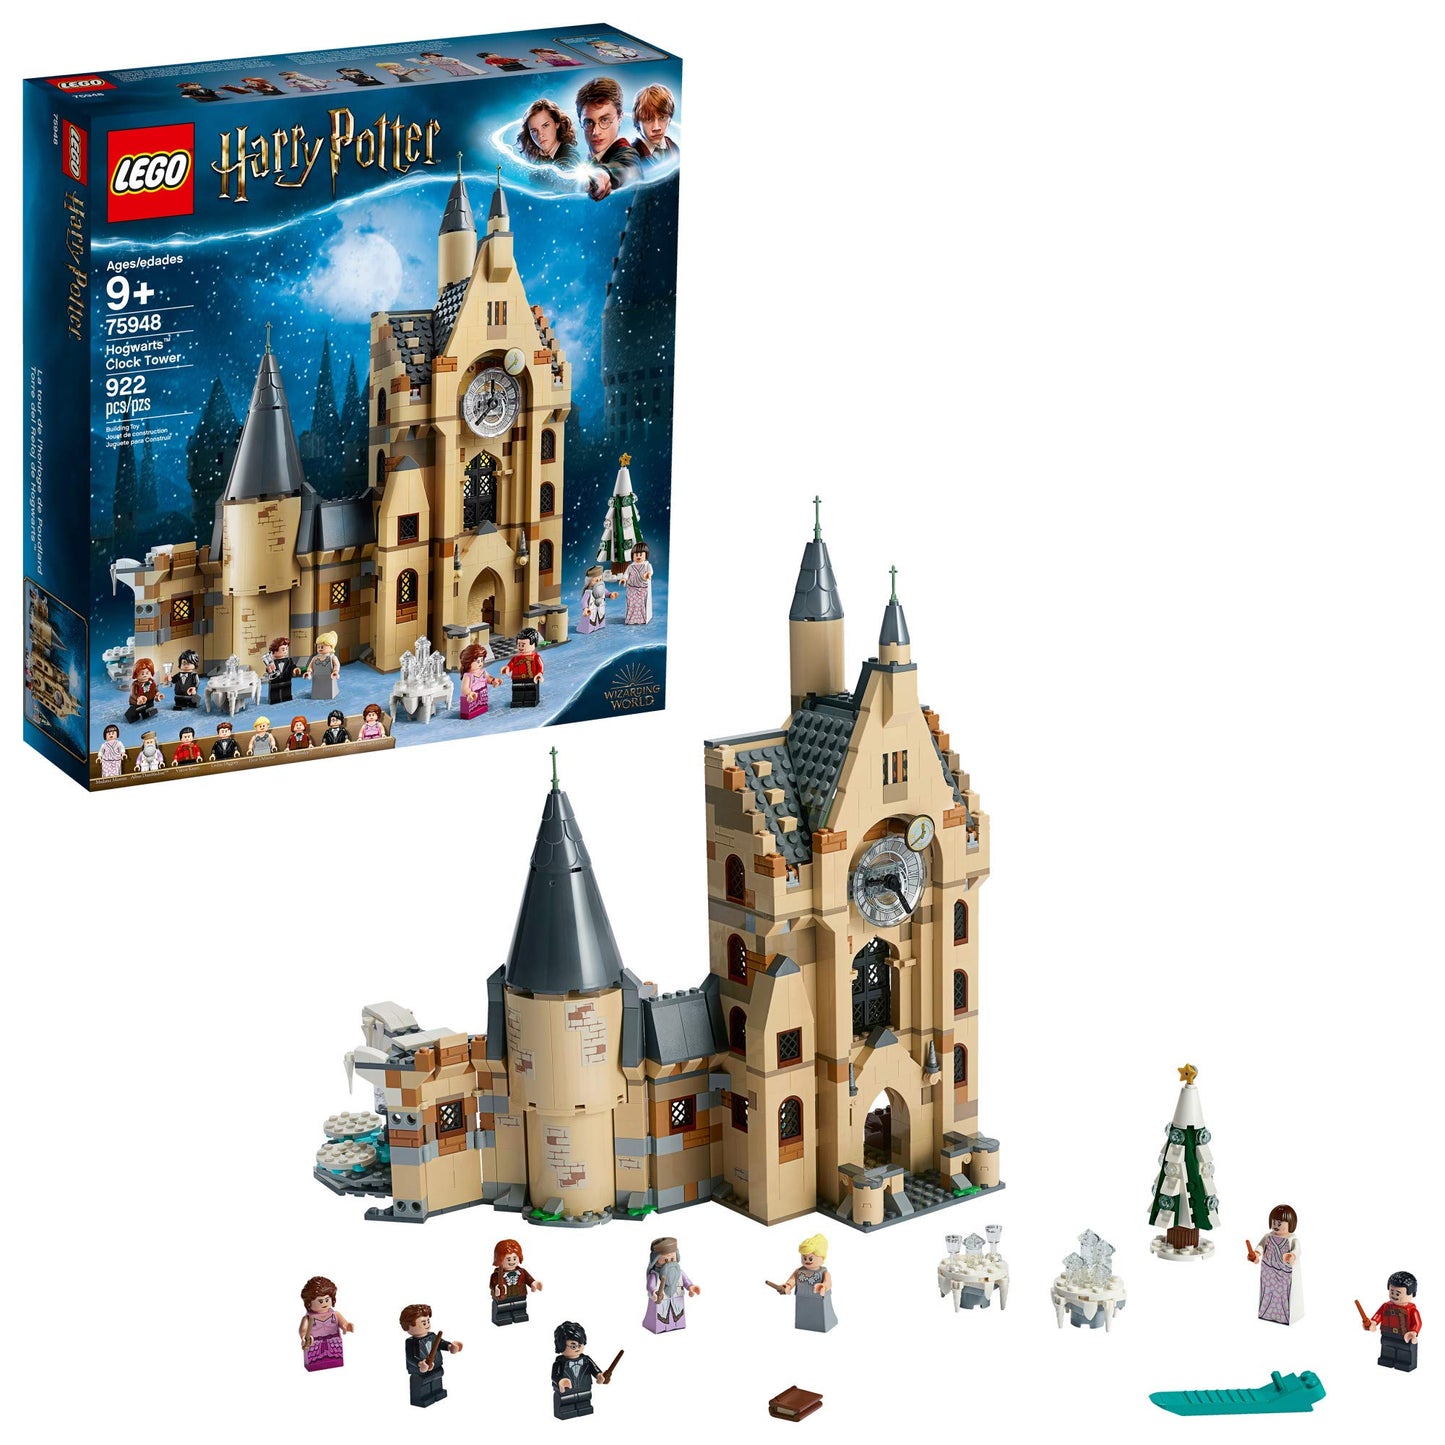 LEGO Harry Potter Hogwarts Clock Tower 75948